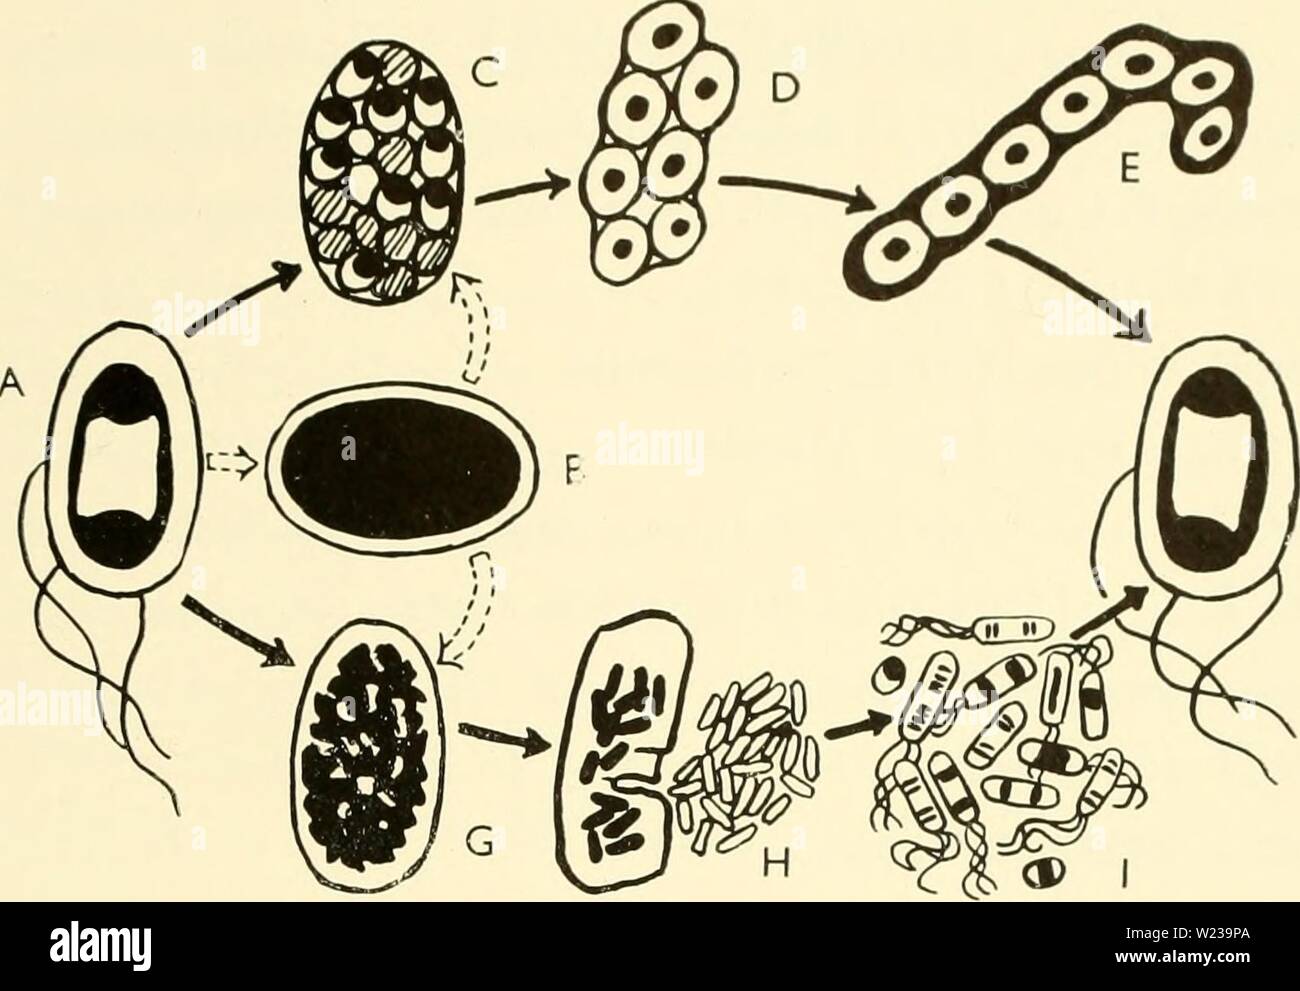 azotobacter colony